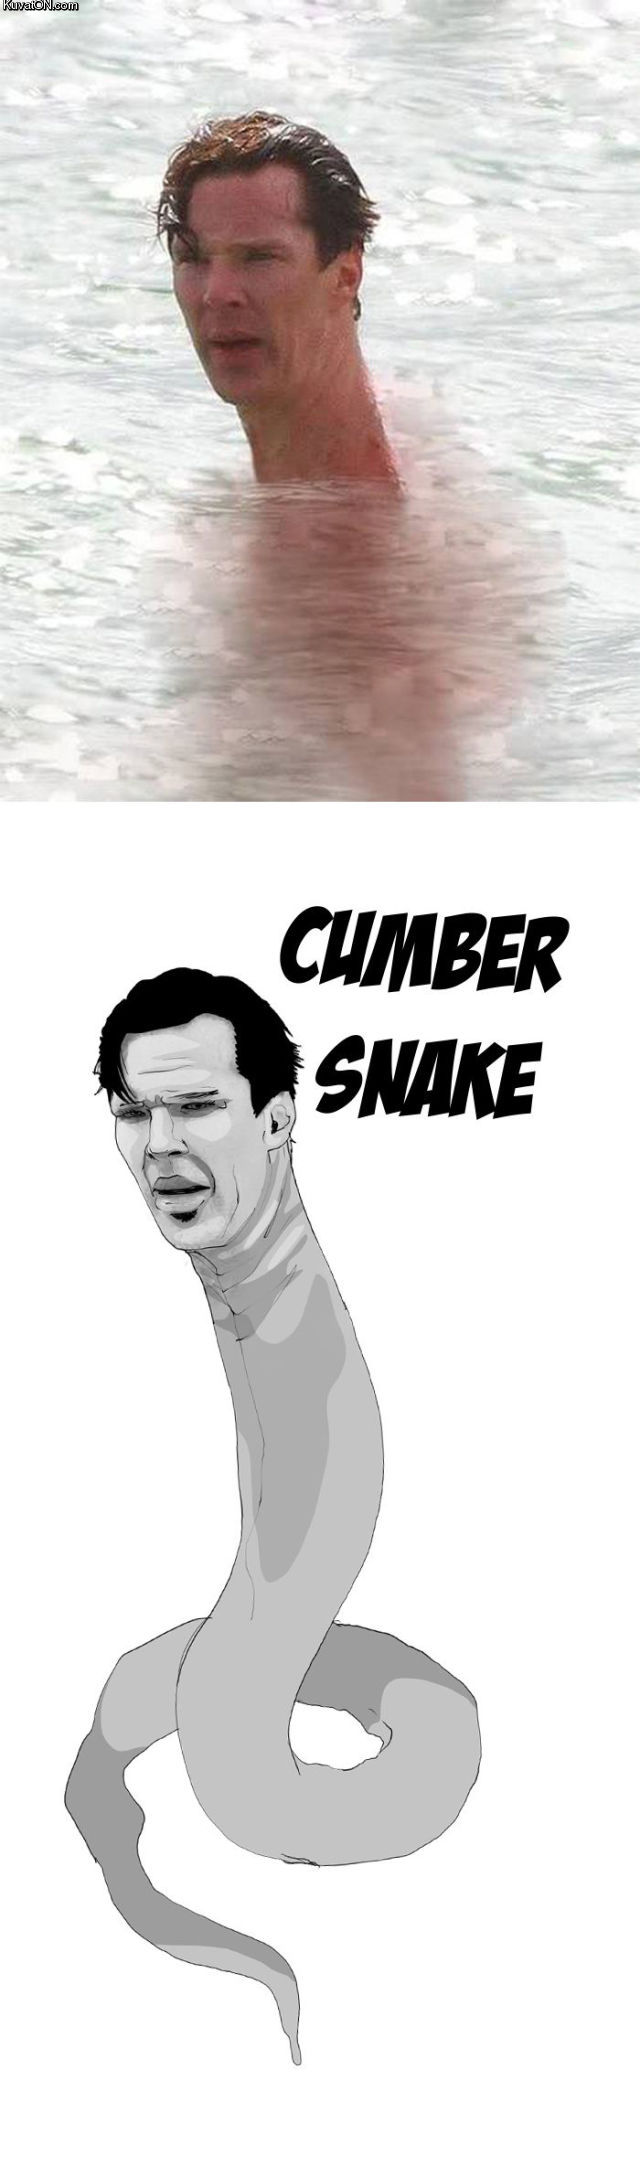 cumber_snake.jpg